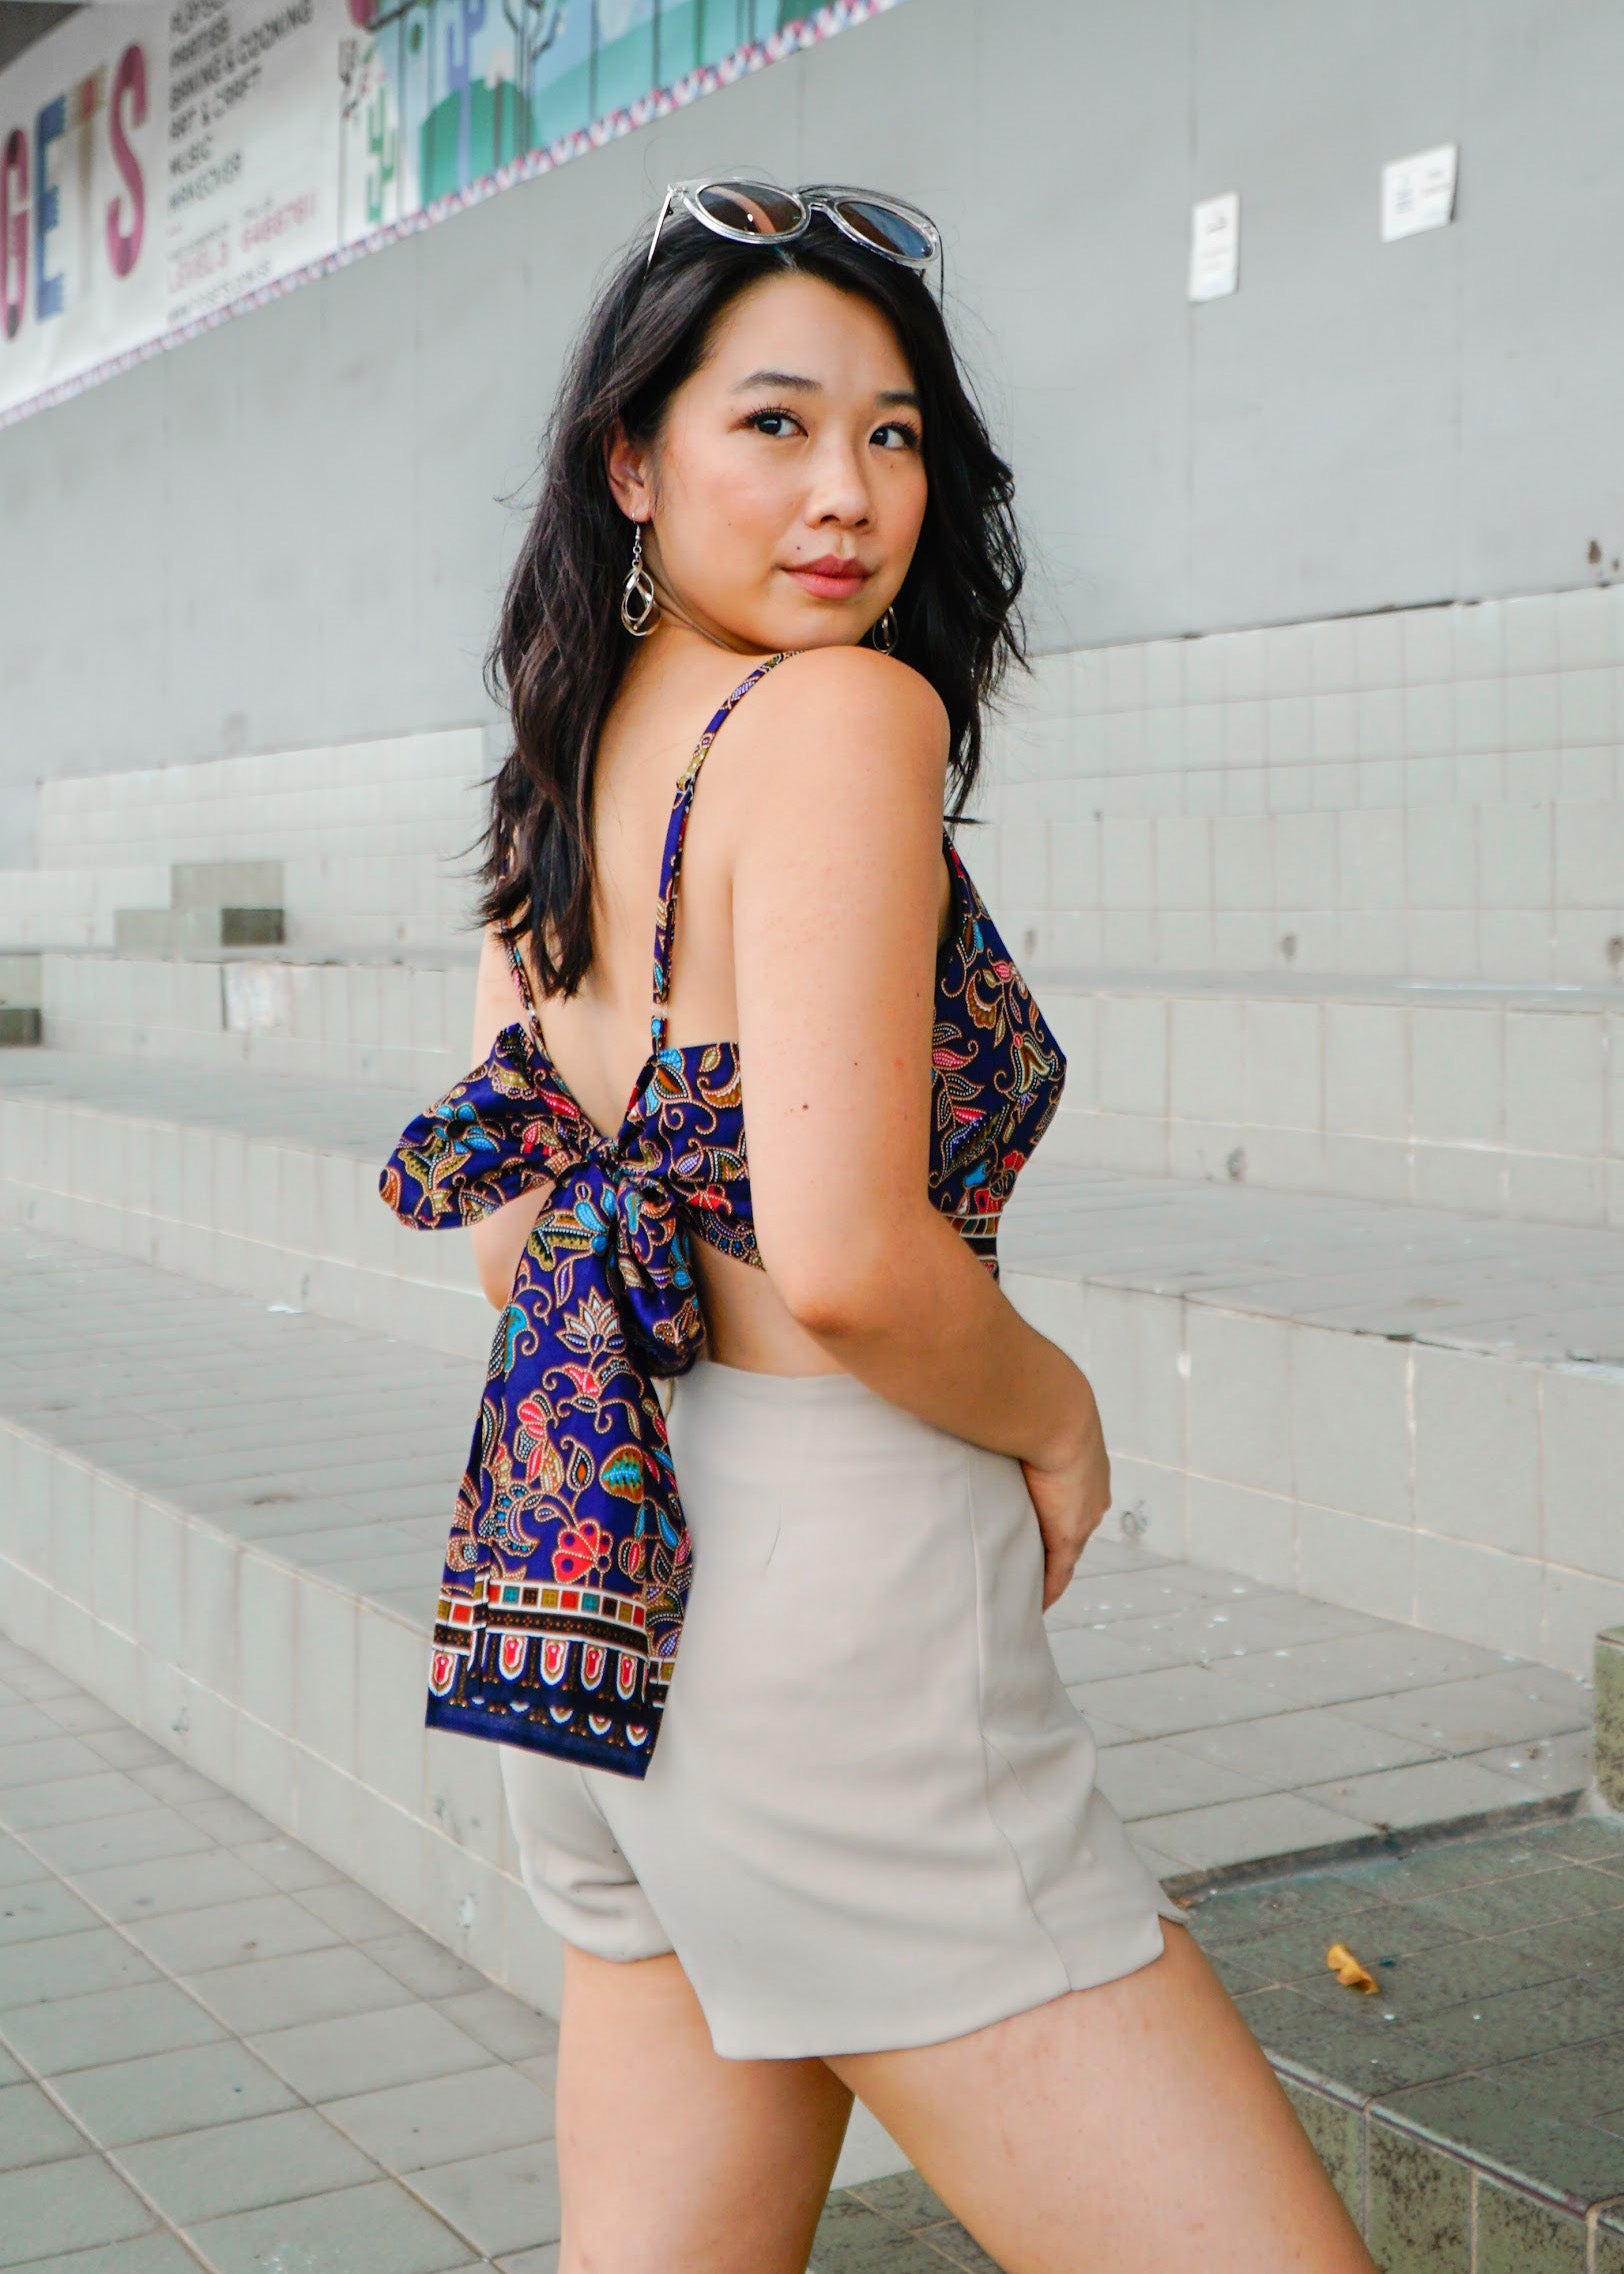 Local Company MakerlySG Reimagines The Iconic SIA Uniform As Modern Batik Wear